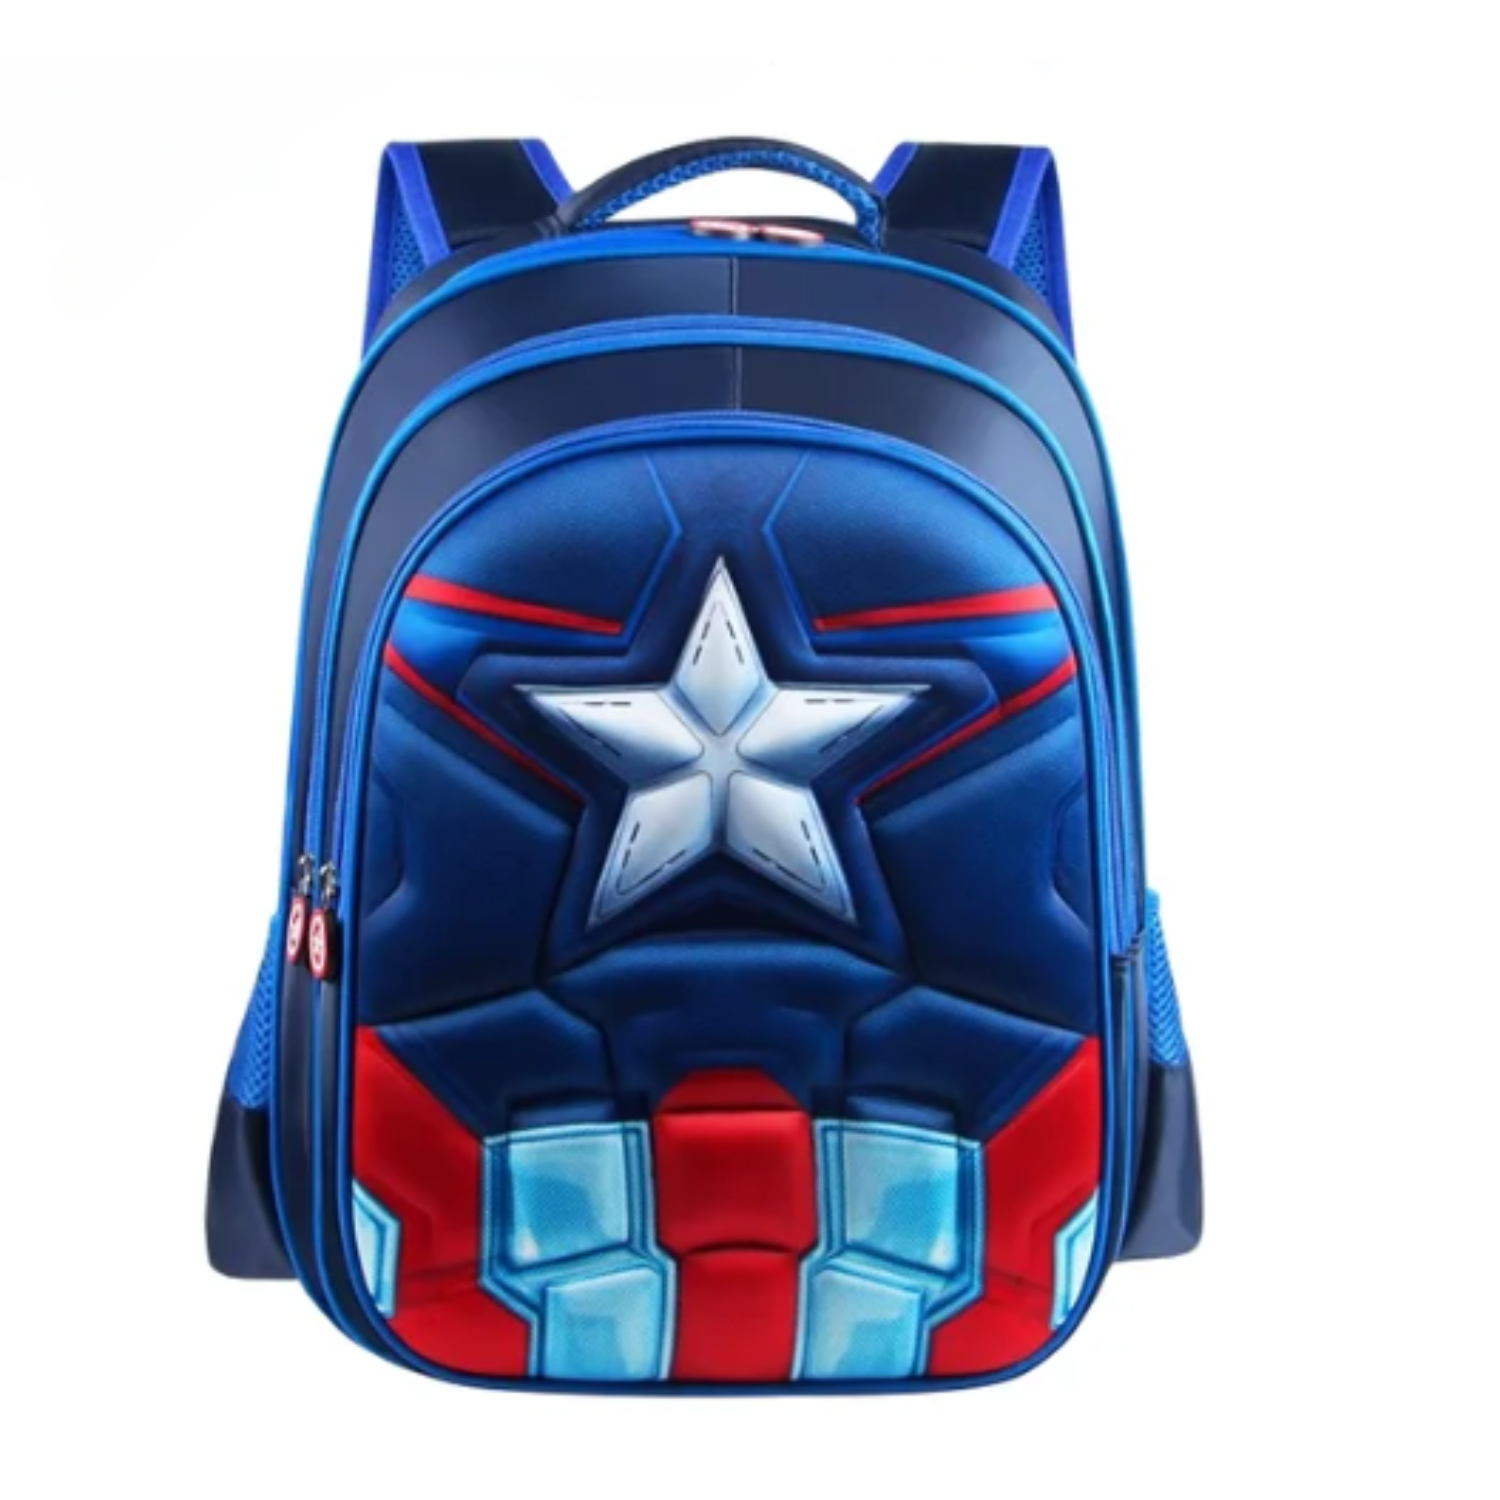 SuperShield Toddler Backpack - Heroic Blue Edition"  Description: